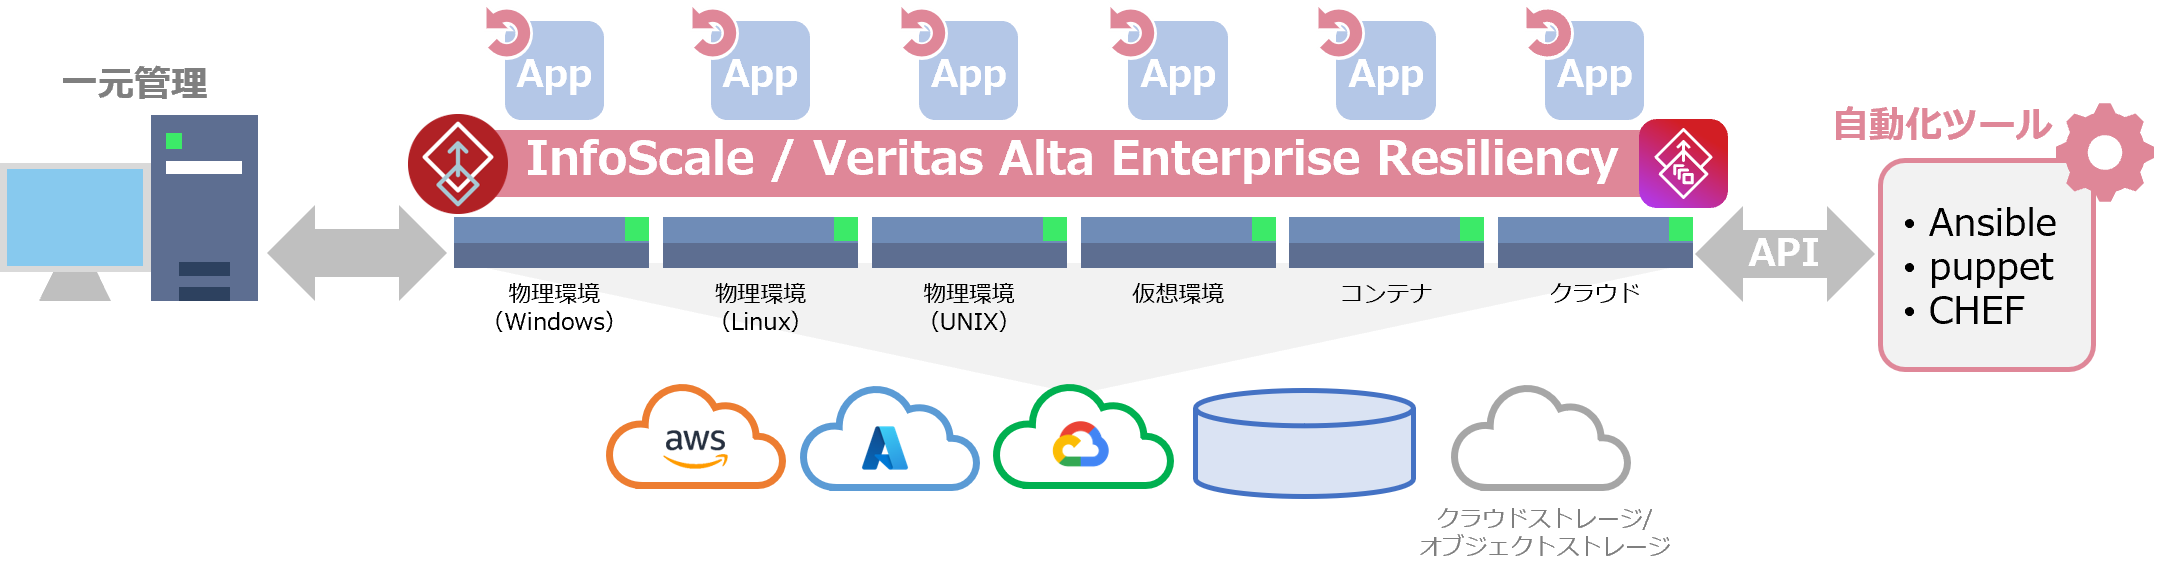 Veritas Alta Enterprise Resiliency / Application Resiliency / Storage Resiliency